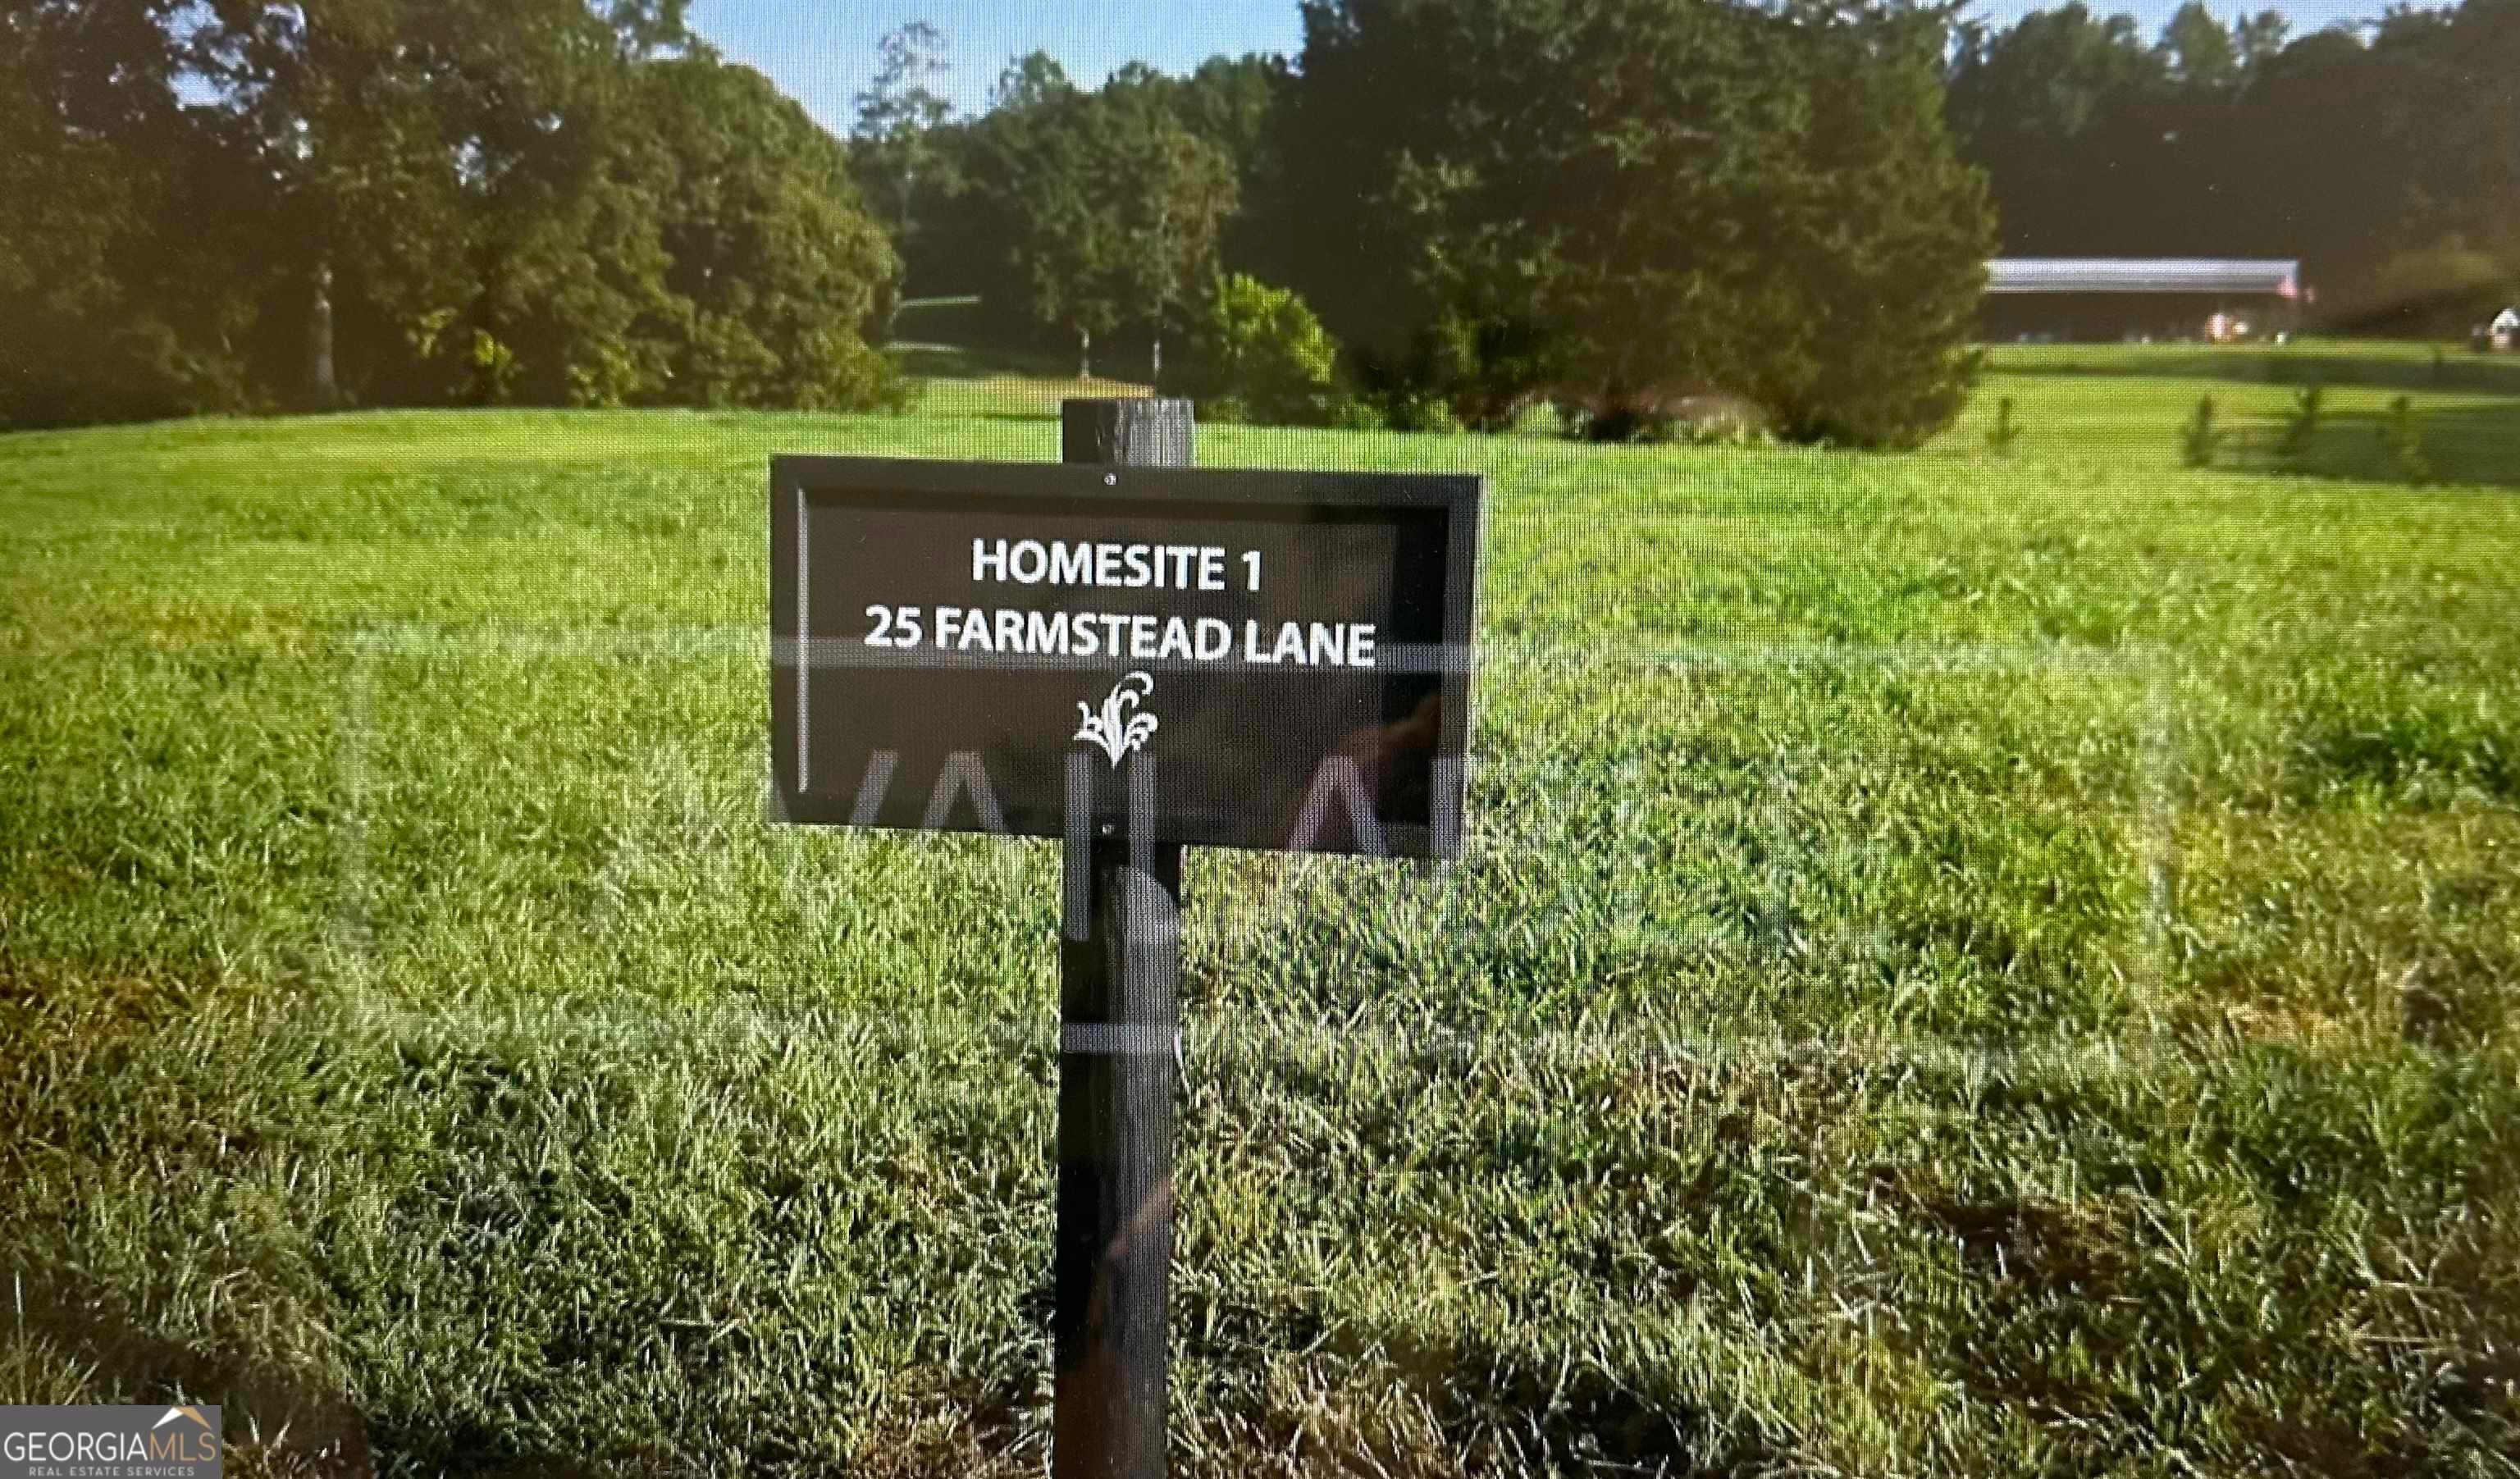 1. 15 Farmstead Lane Homesite 1